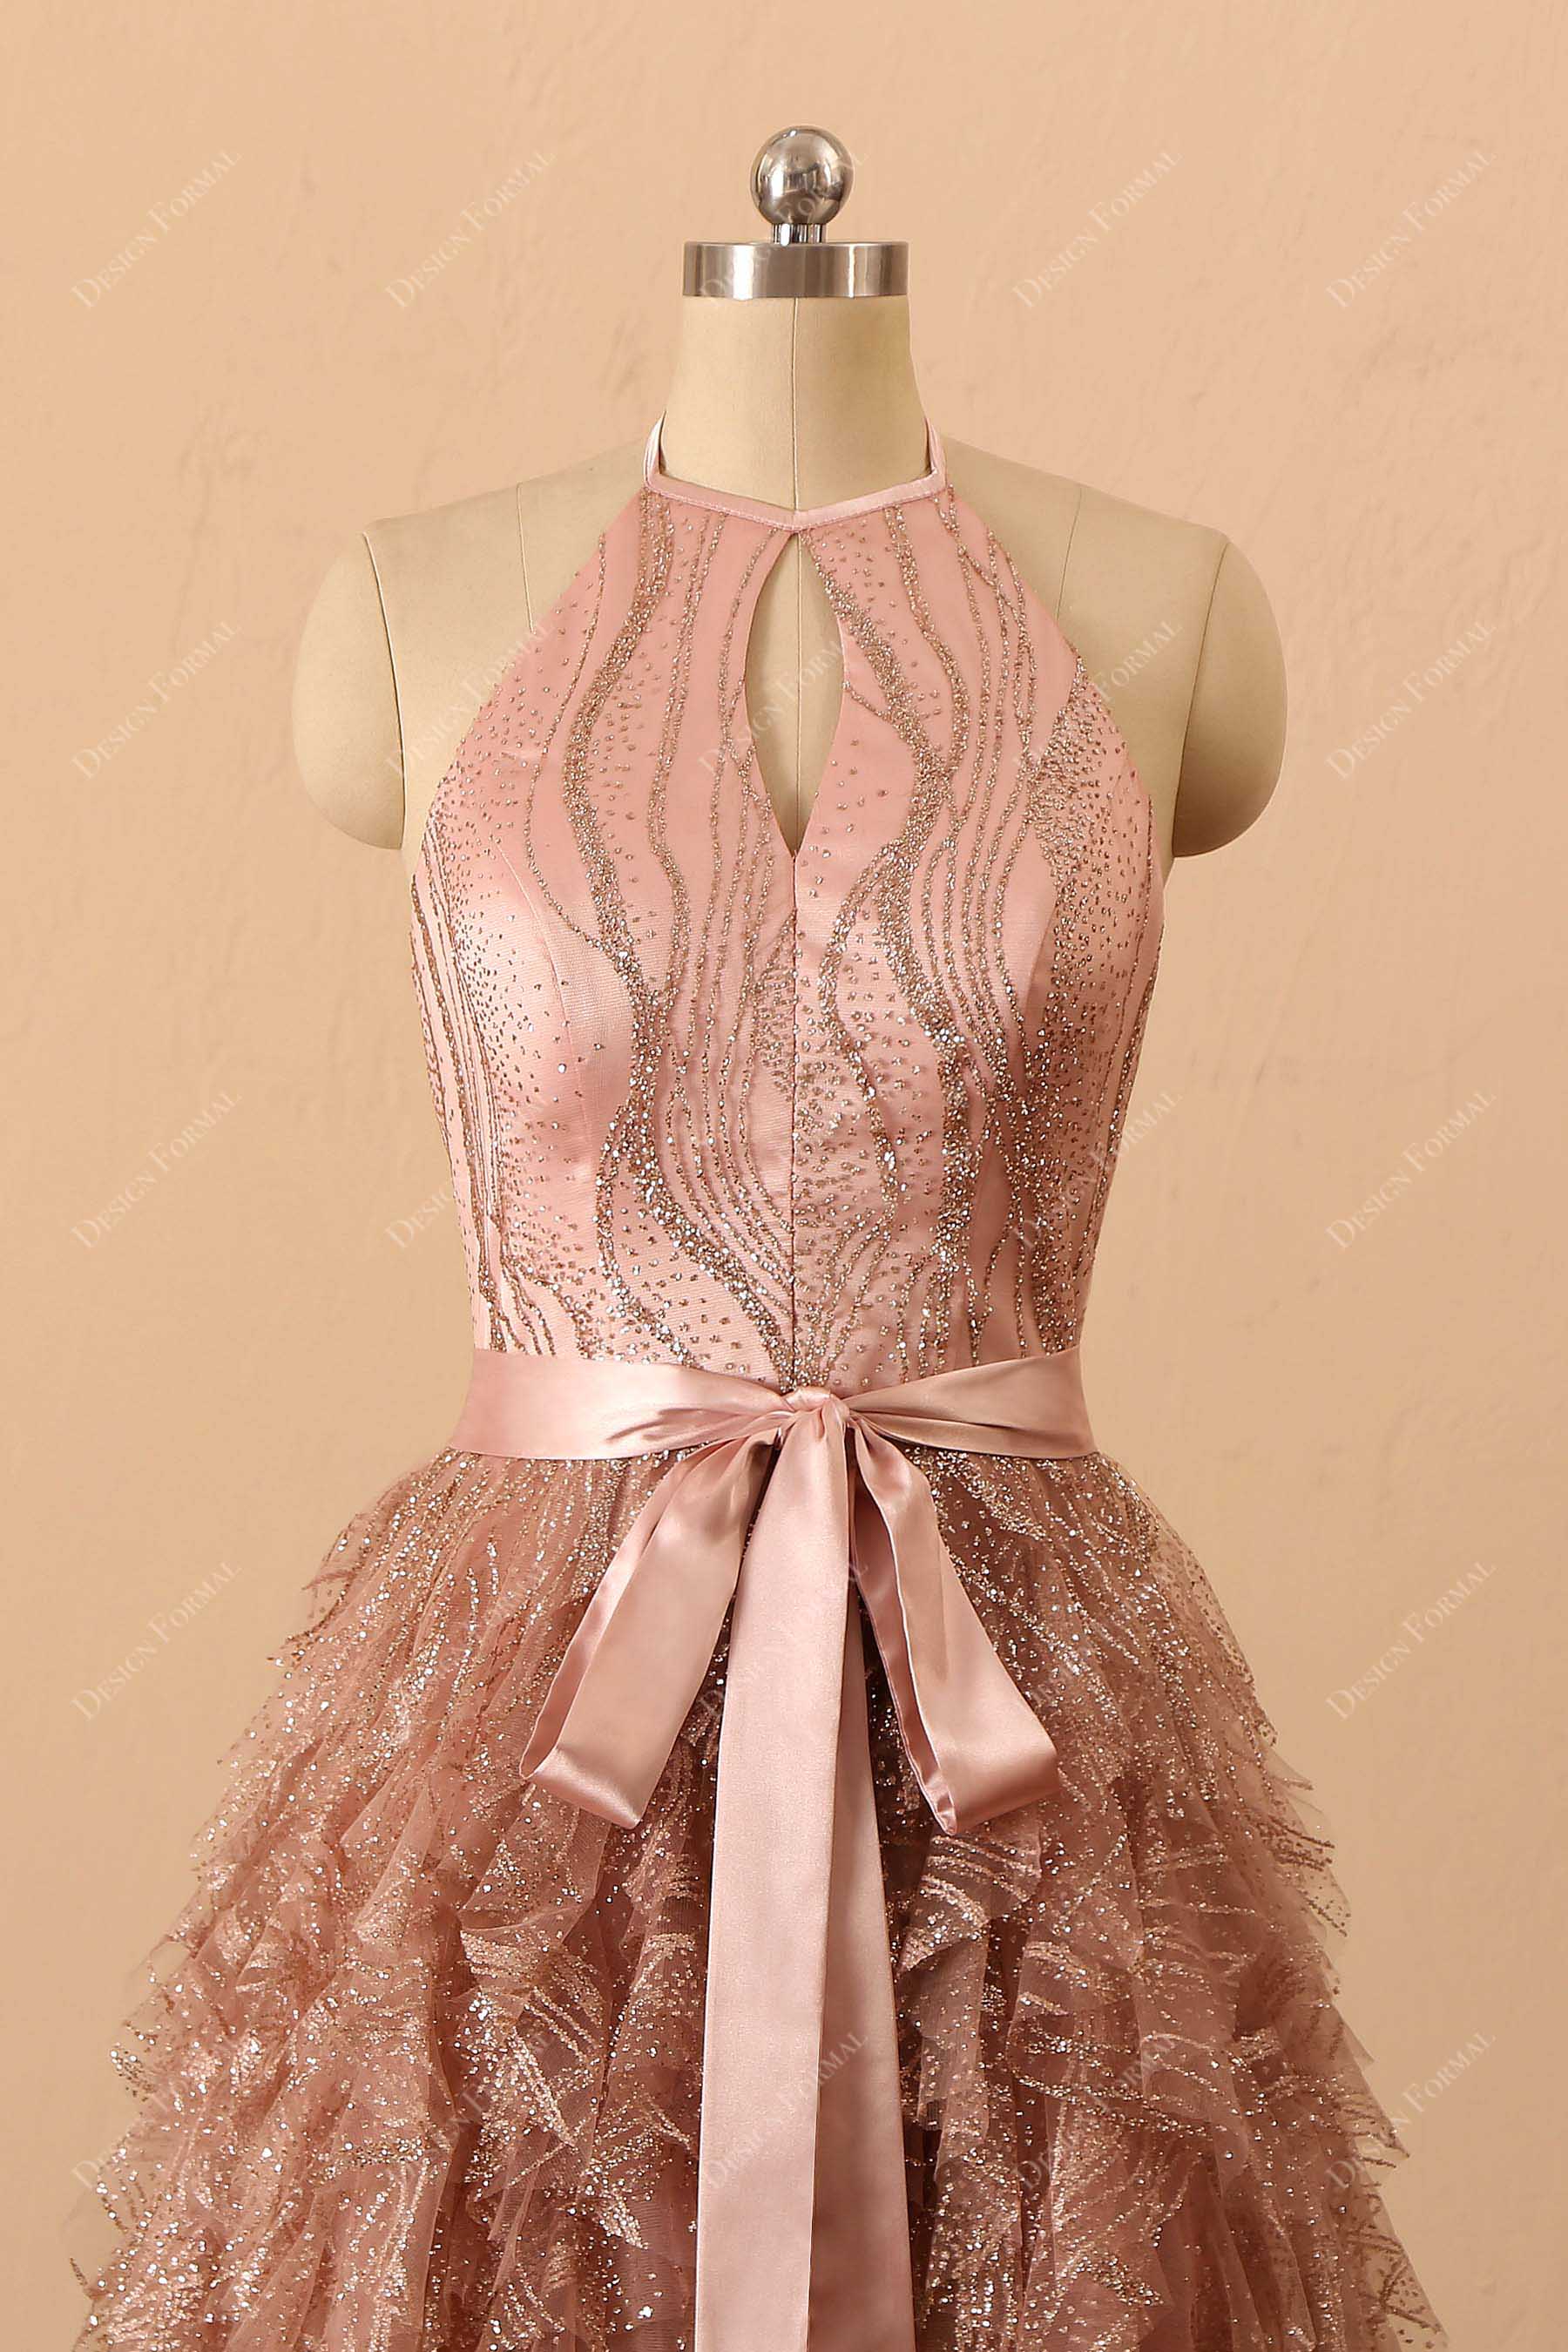 keyhole halter rose gold glitter prom dress